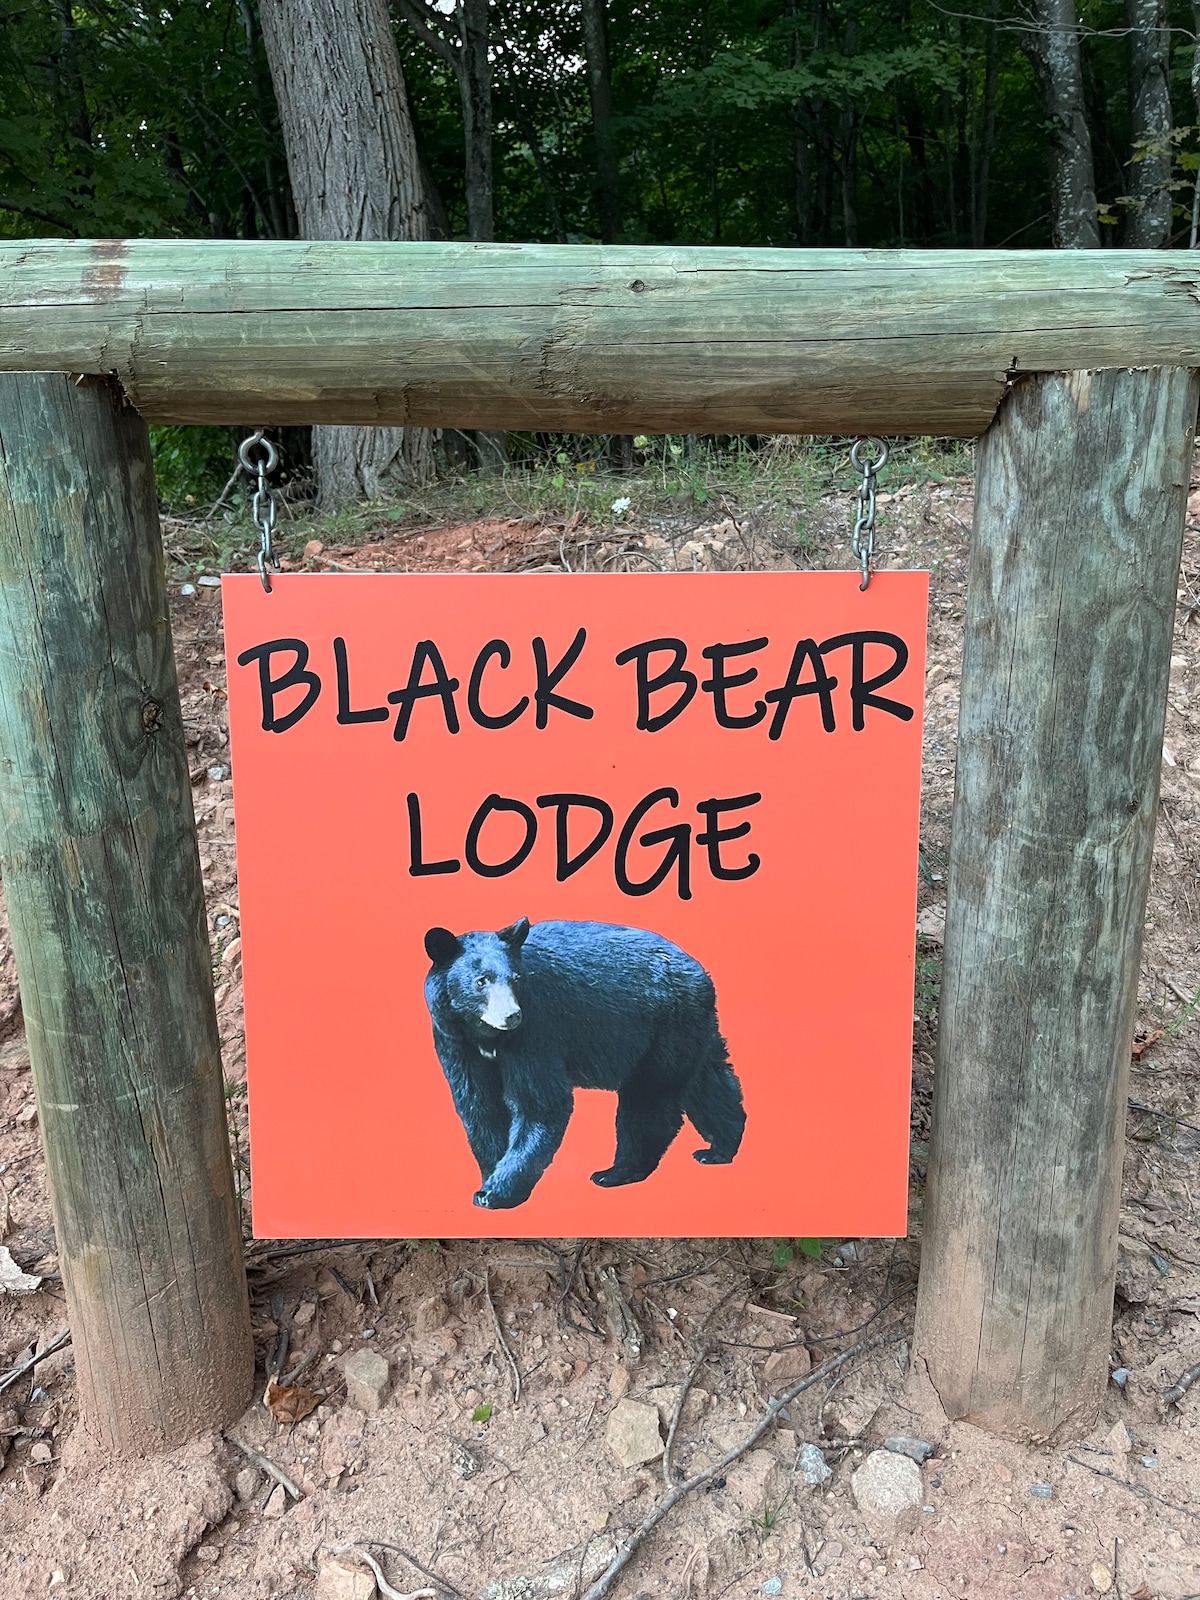 Bear Lodge是您的云杉旋钮徒步旅行目的地。